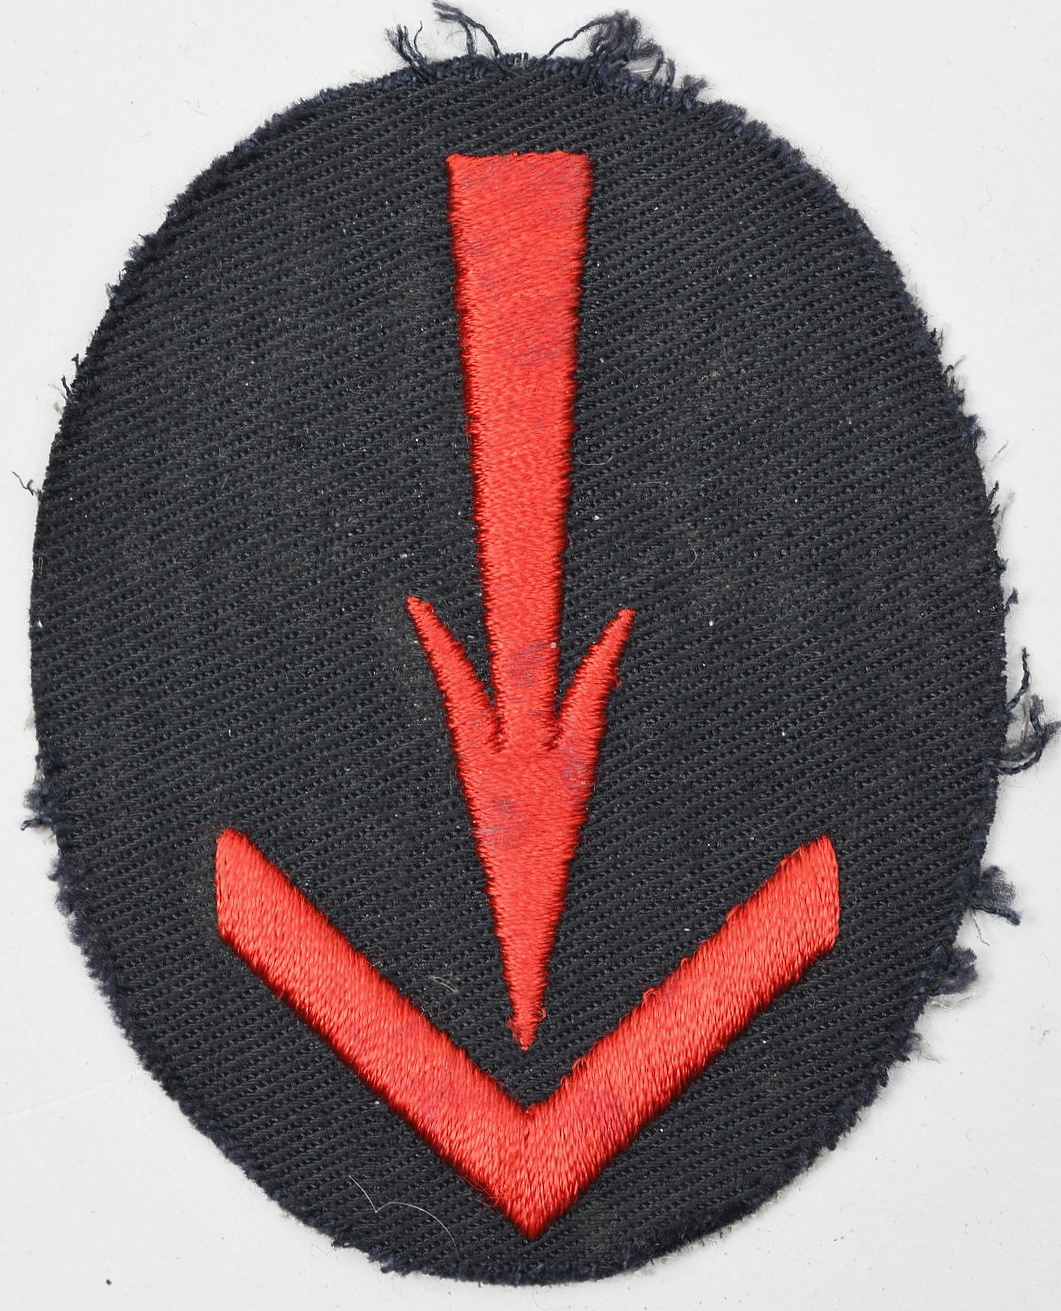 Kriegsmarine EM/NCO's Hydrophone Speciality Badge